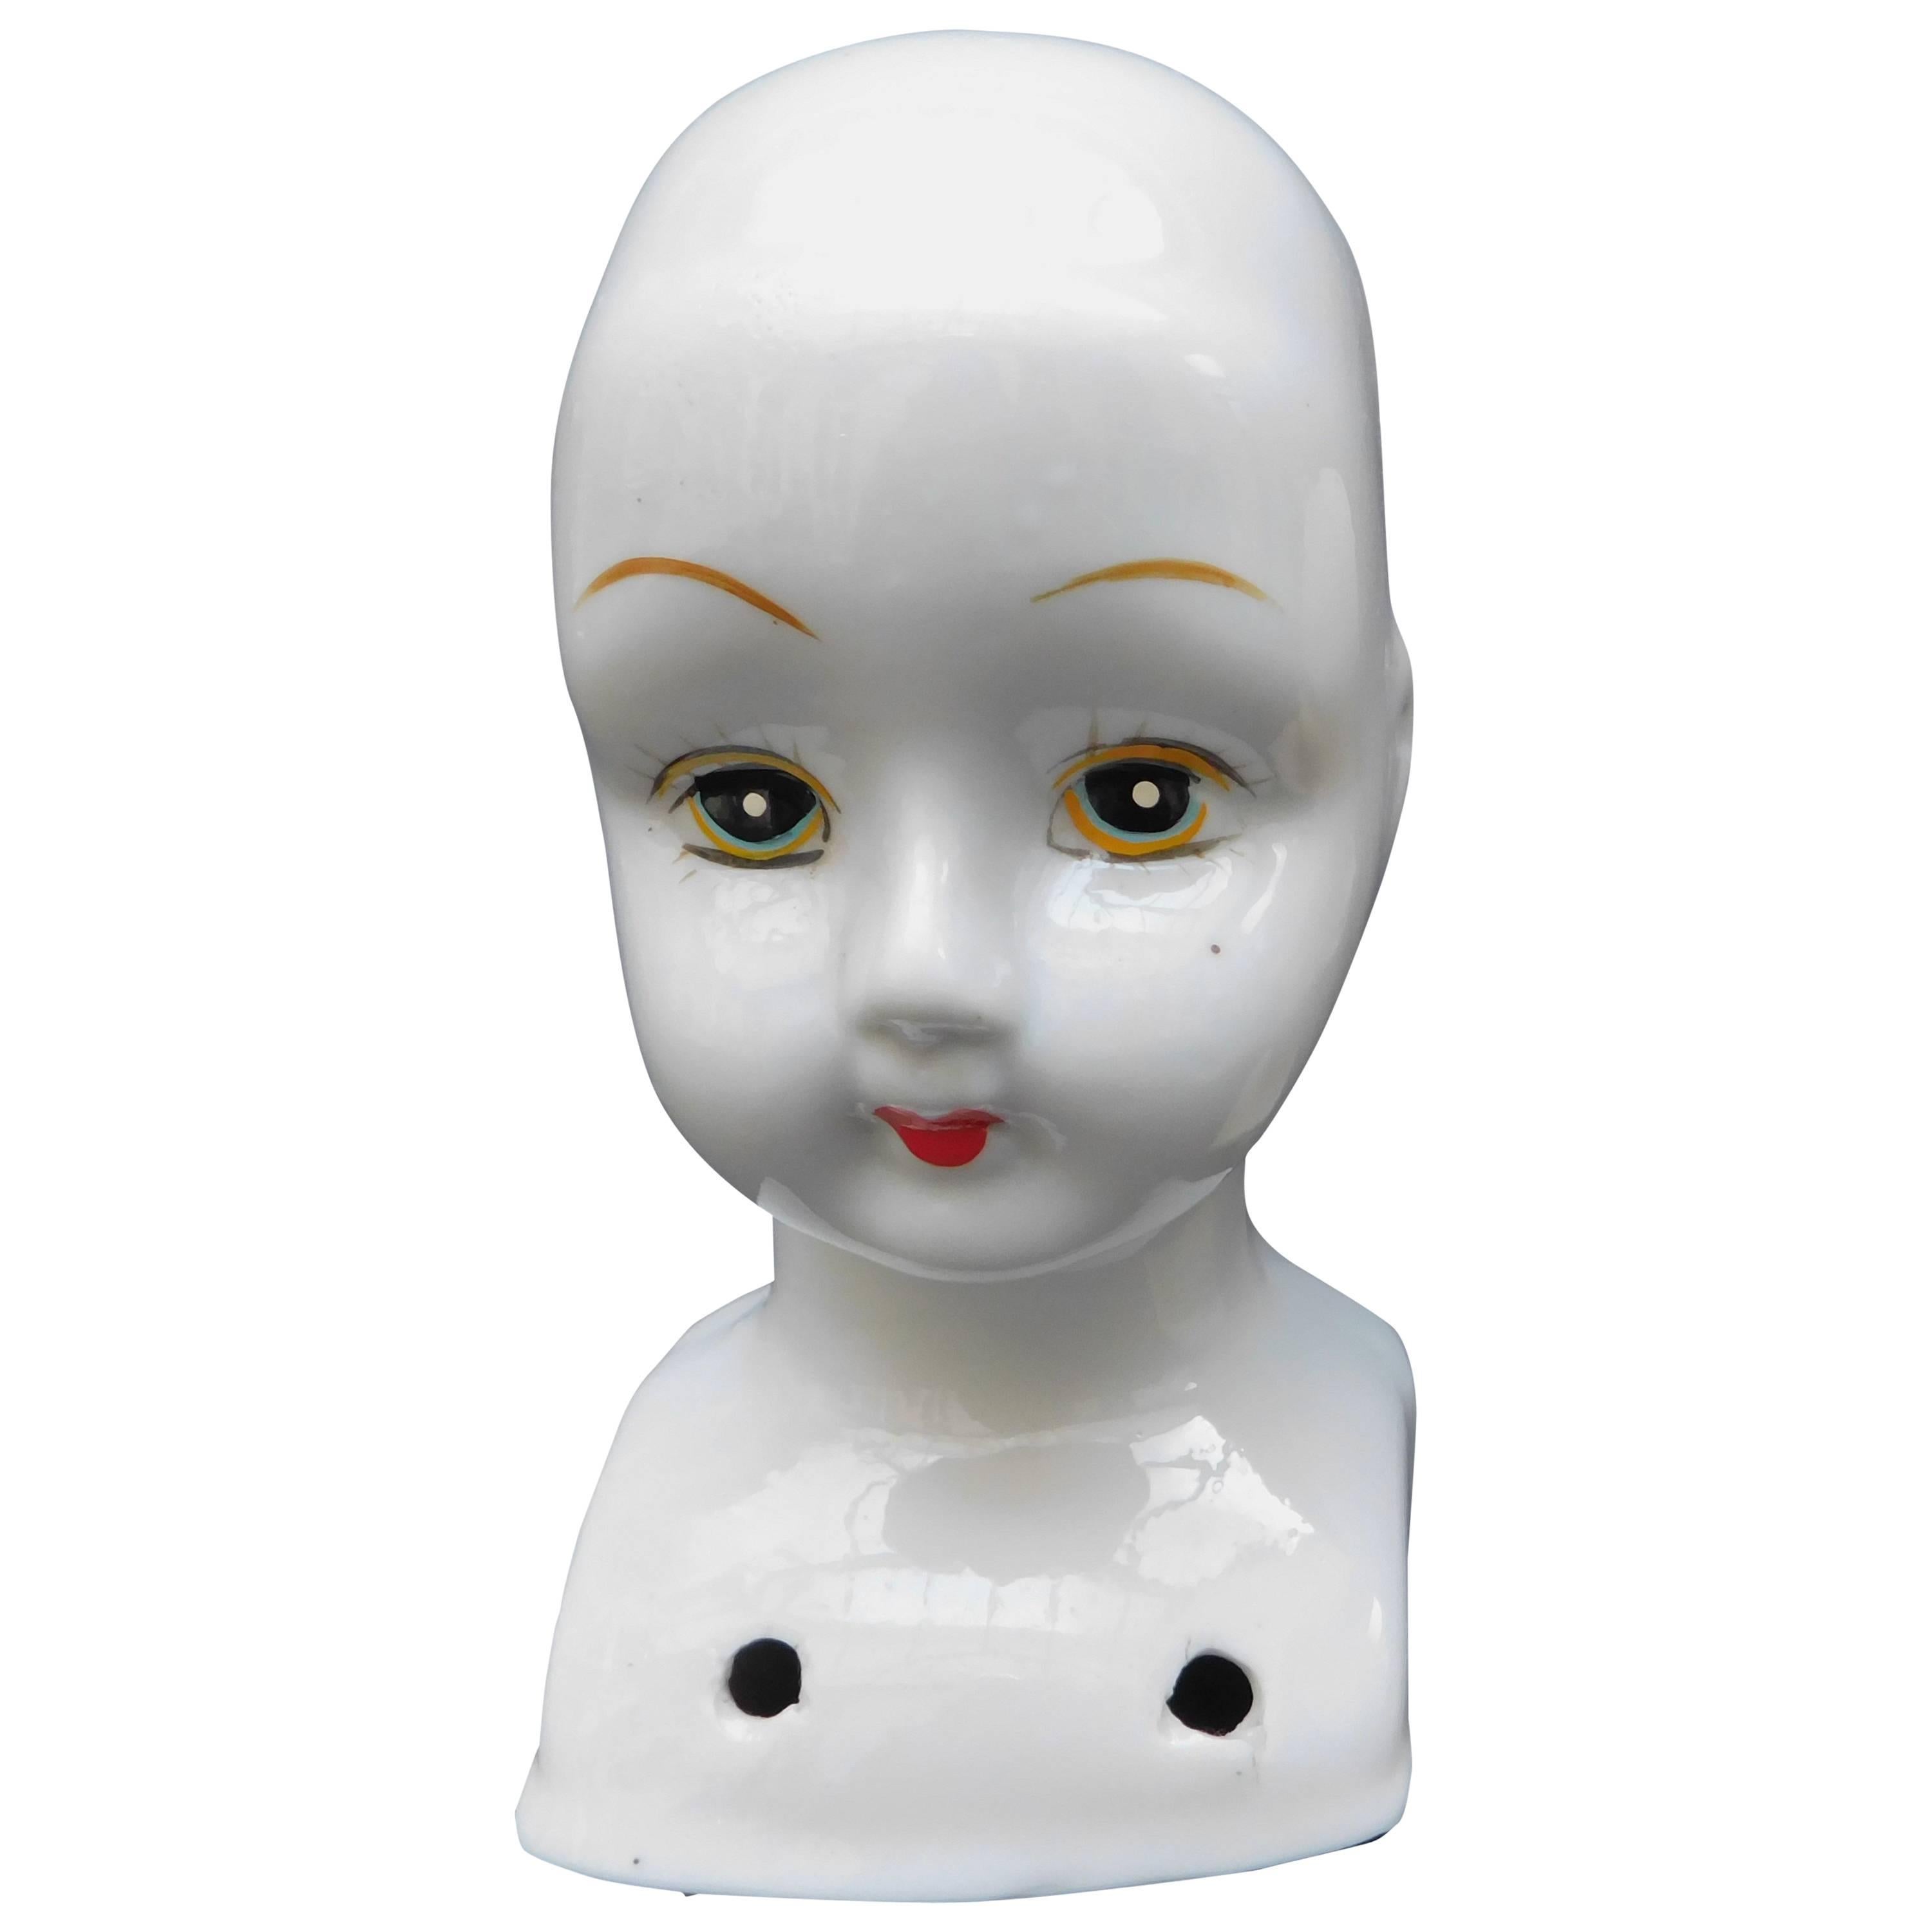 19th century German Porcelain Doll Head